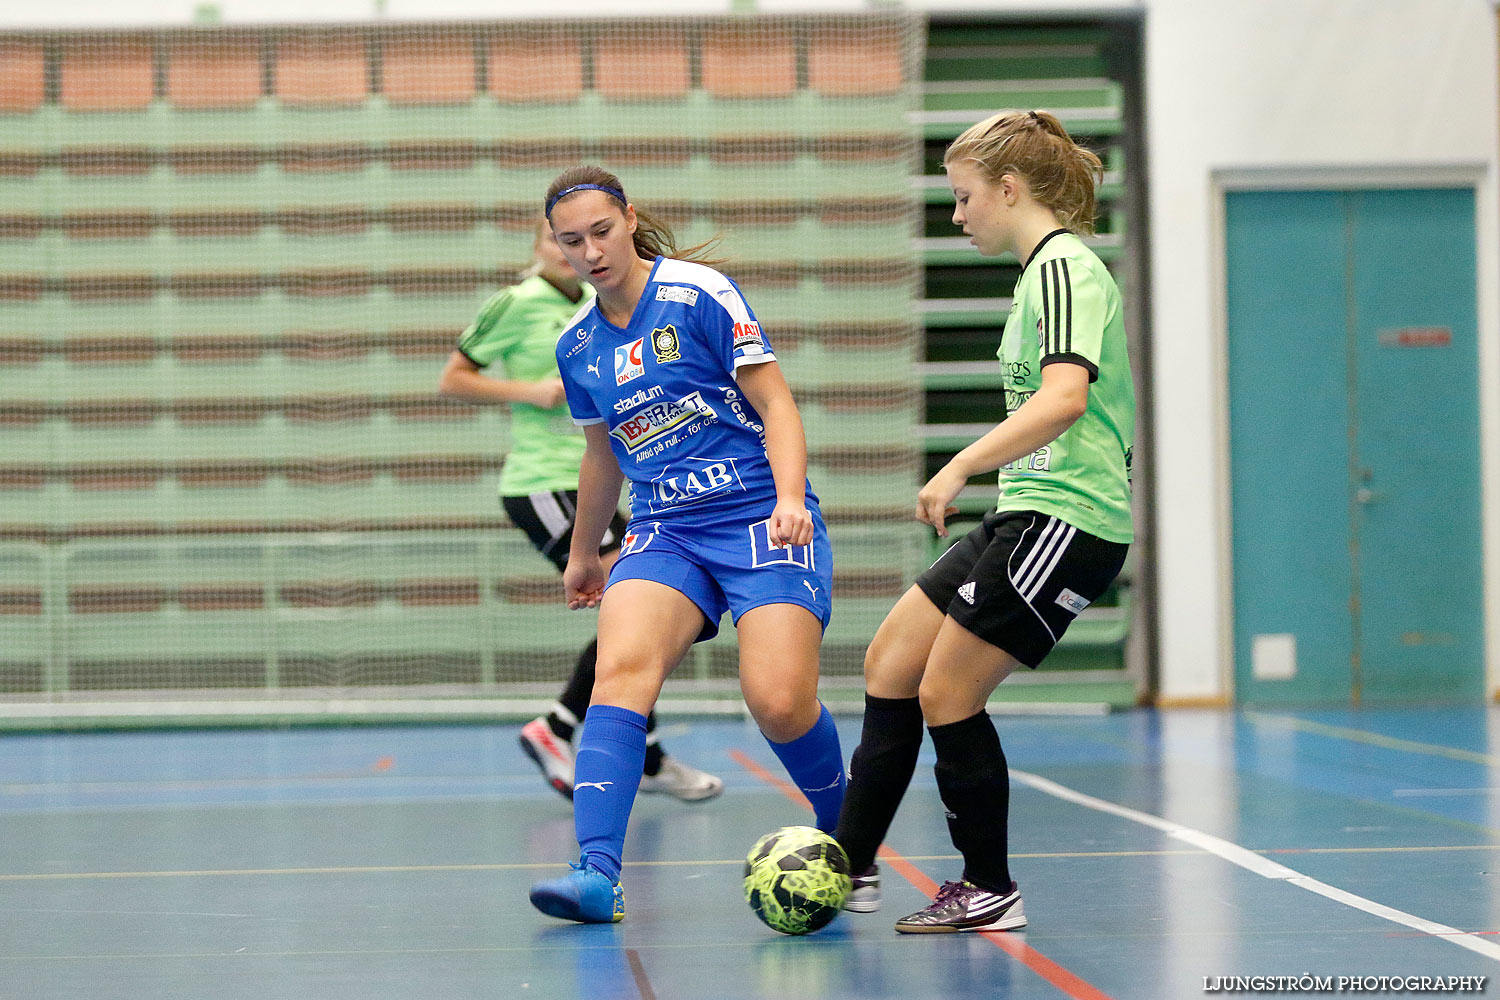 Skövde Futsalcup Damer QBIK-Hörnebo SK,dam,Arena Skövde,Skövde,Sverige,Skövde Futsalcup 2015,Futsal,2015,125292